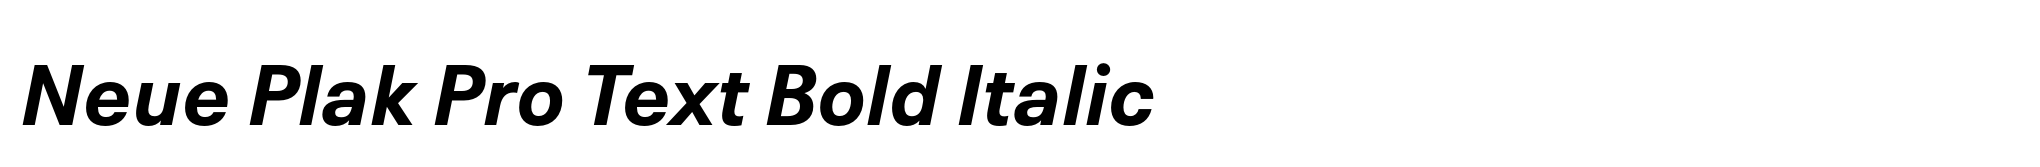 Neue Plak Pro Text Bold Italic image